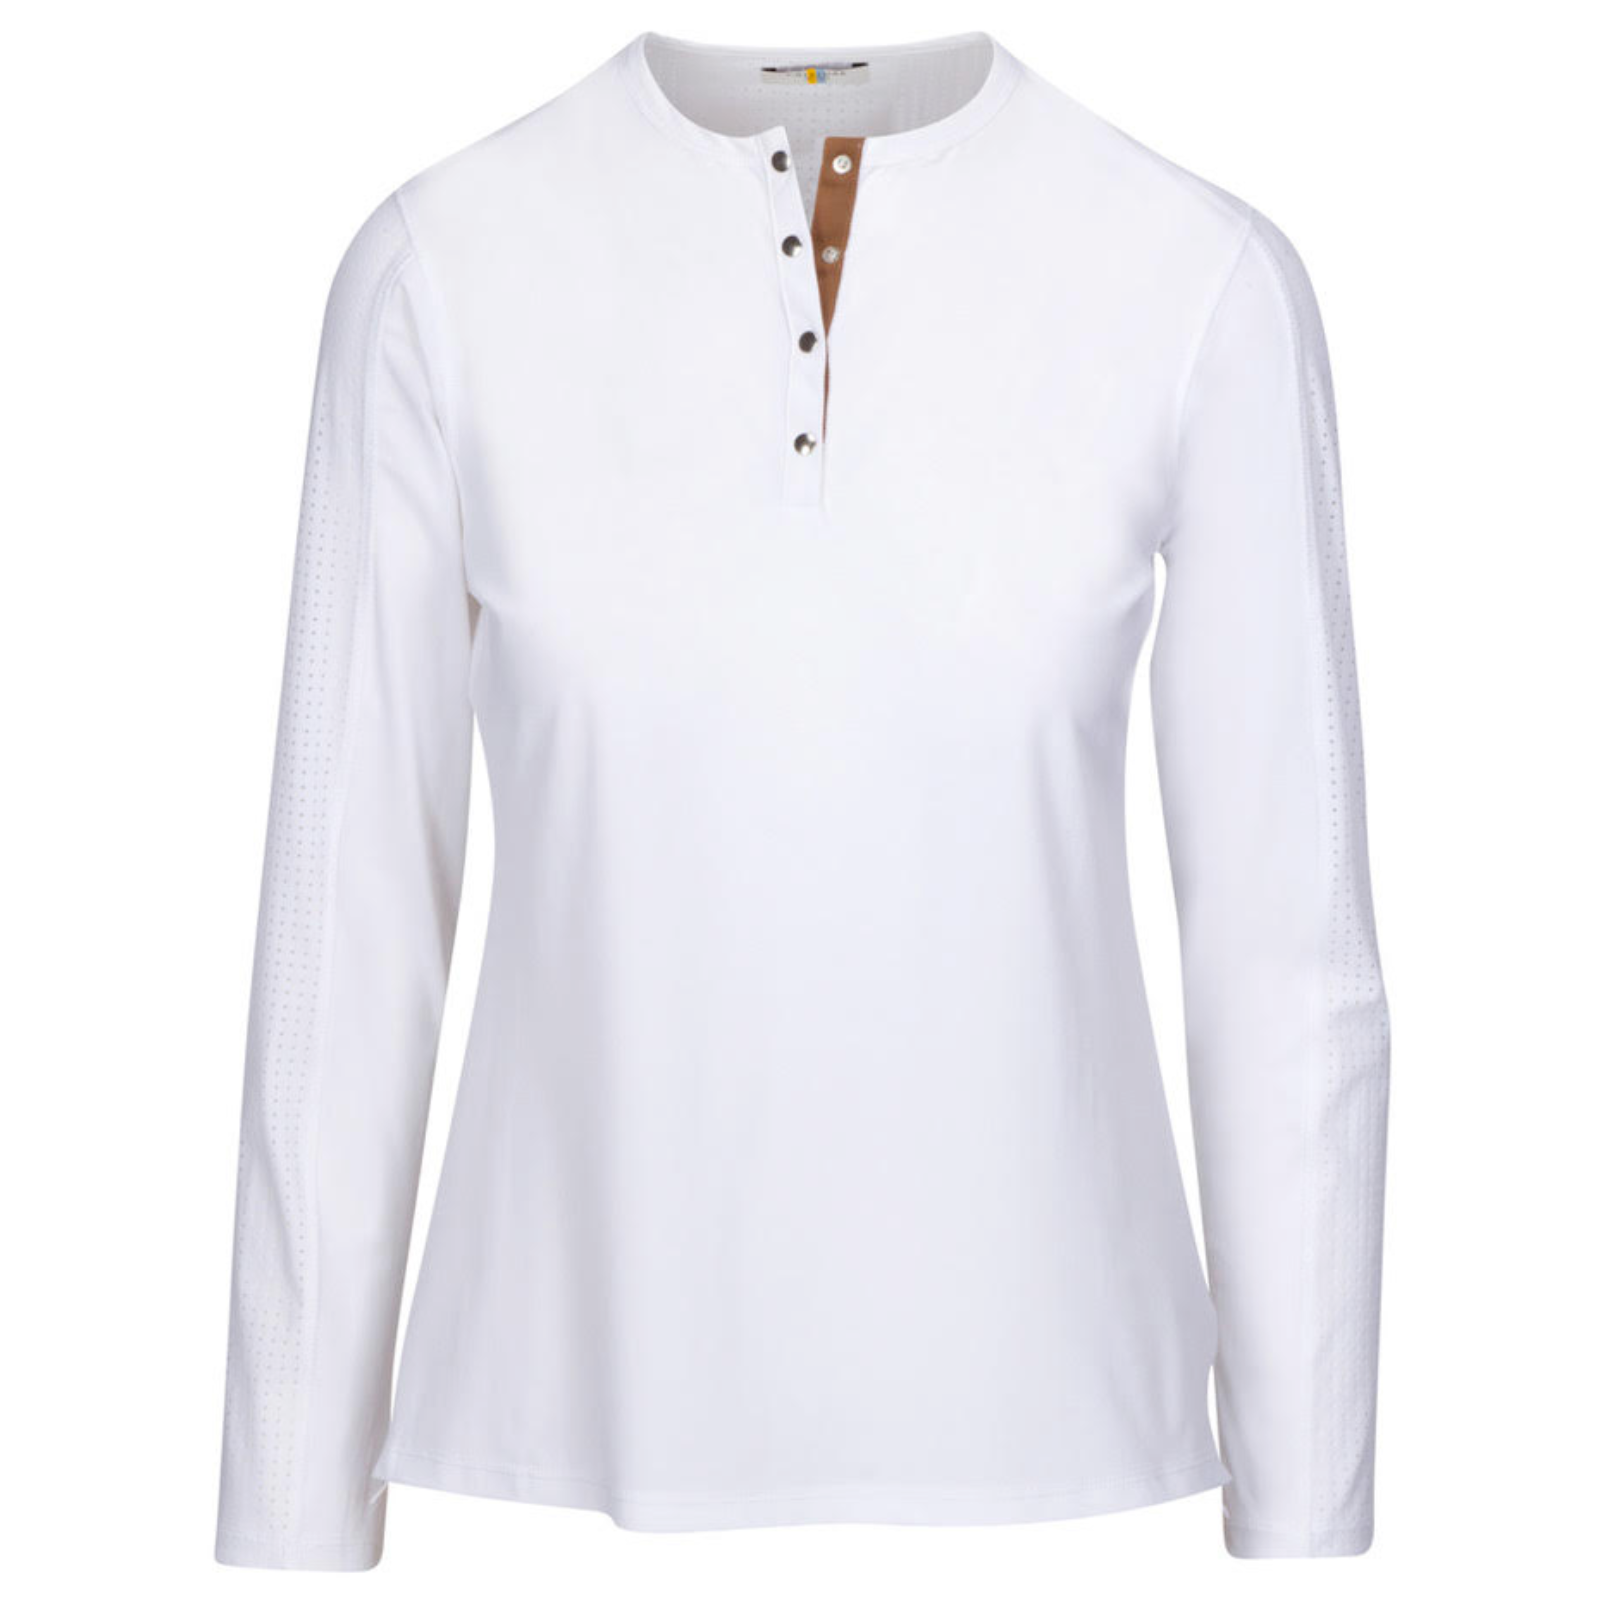 CALLIDAE The Tech Practice Shirt in White w/ Ochre Ribbon